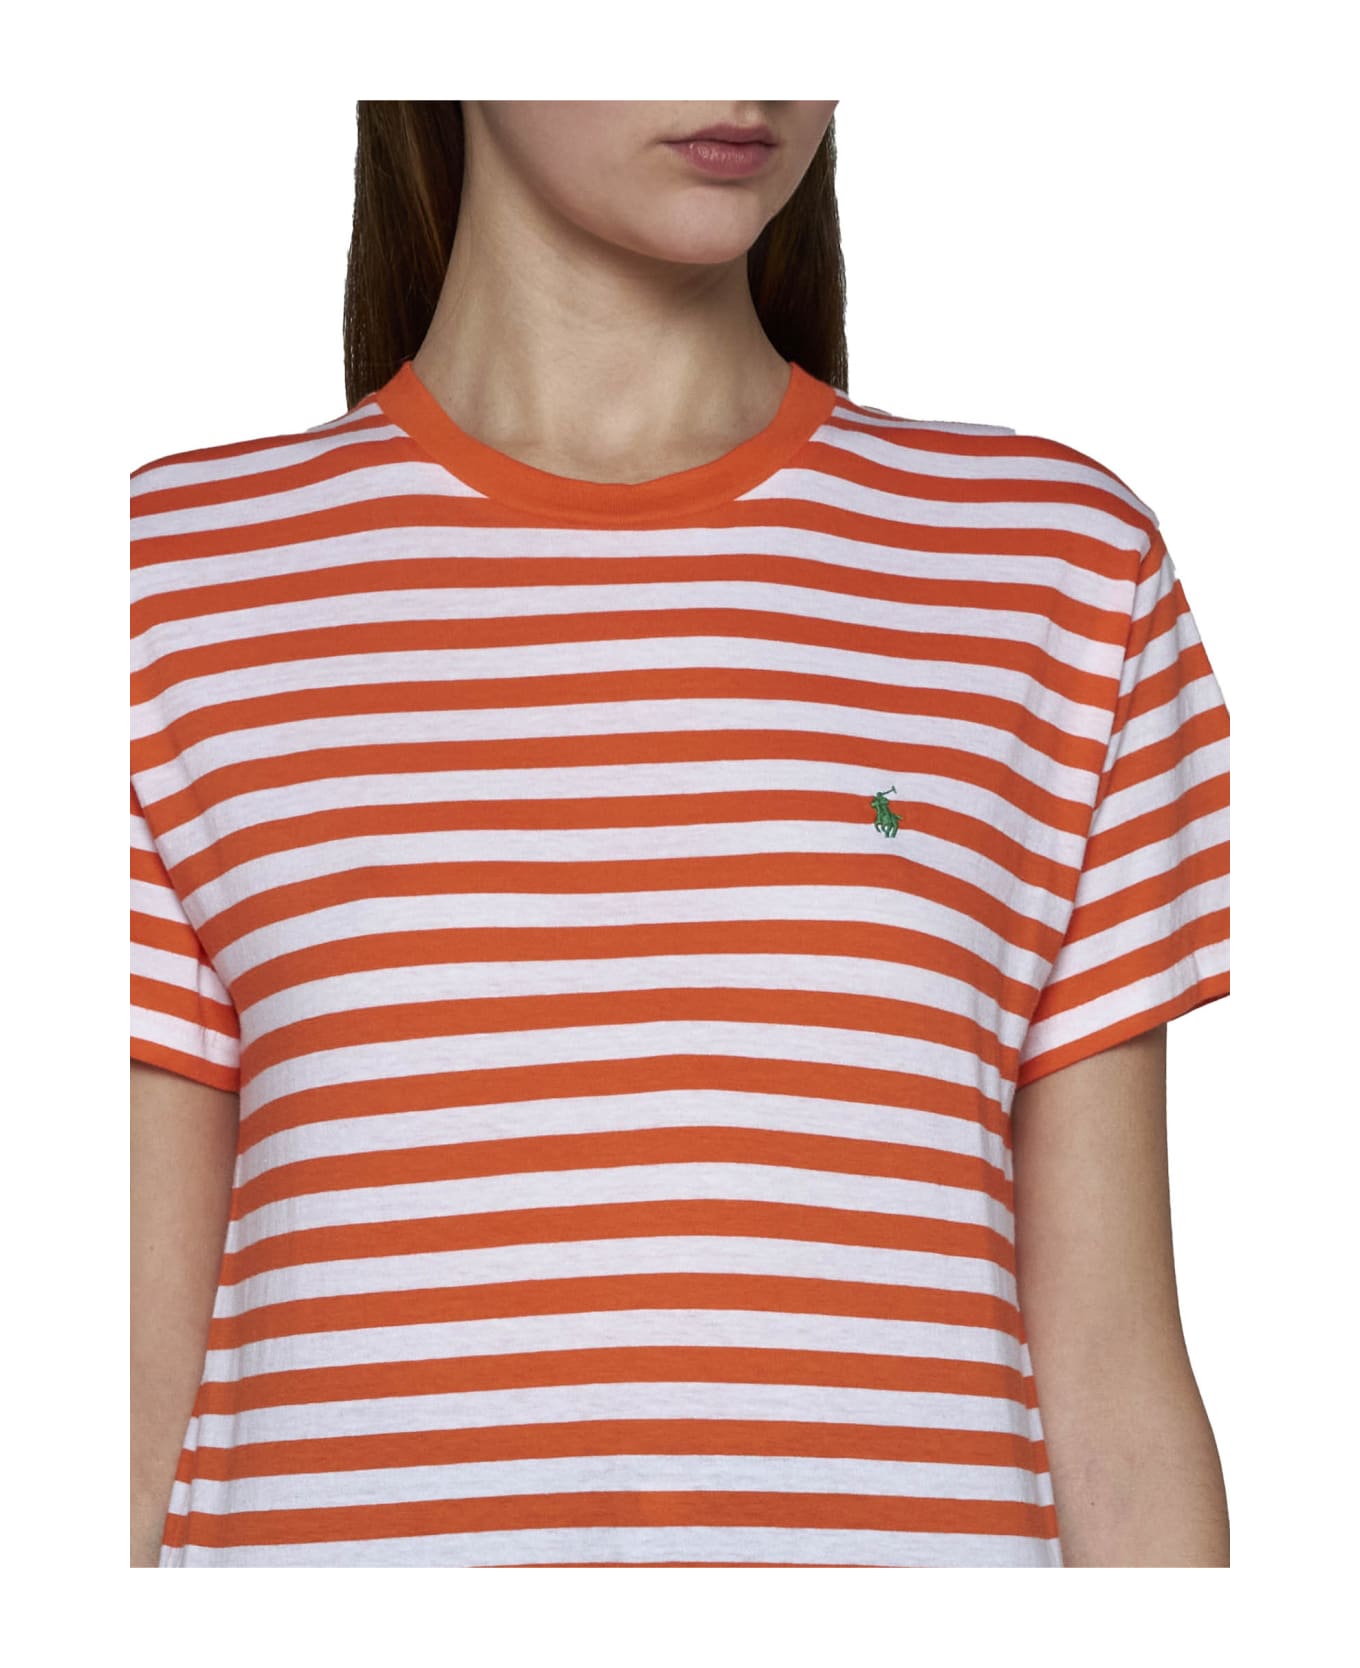 Polo Ralph Lauren T-Shirt - Orange/white